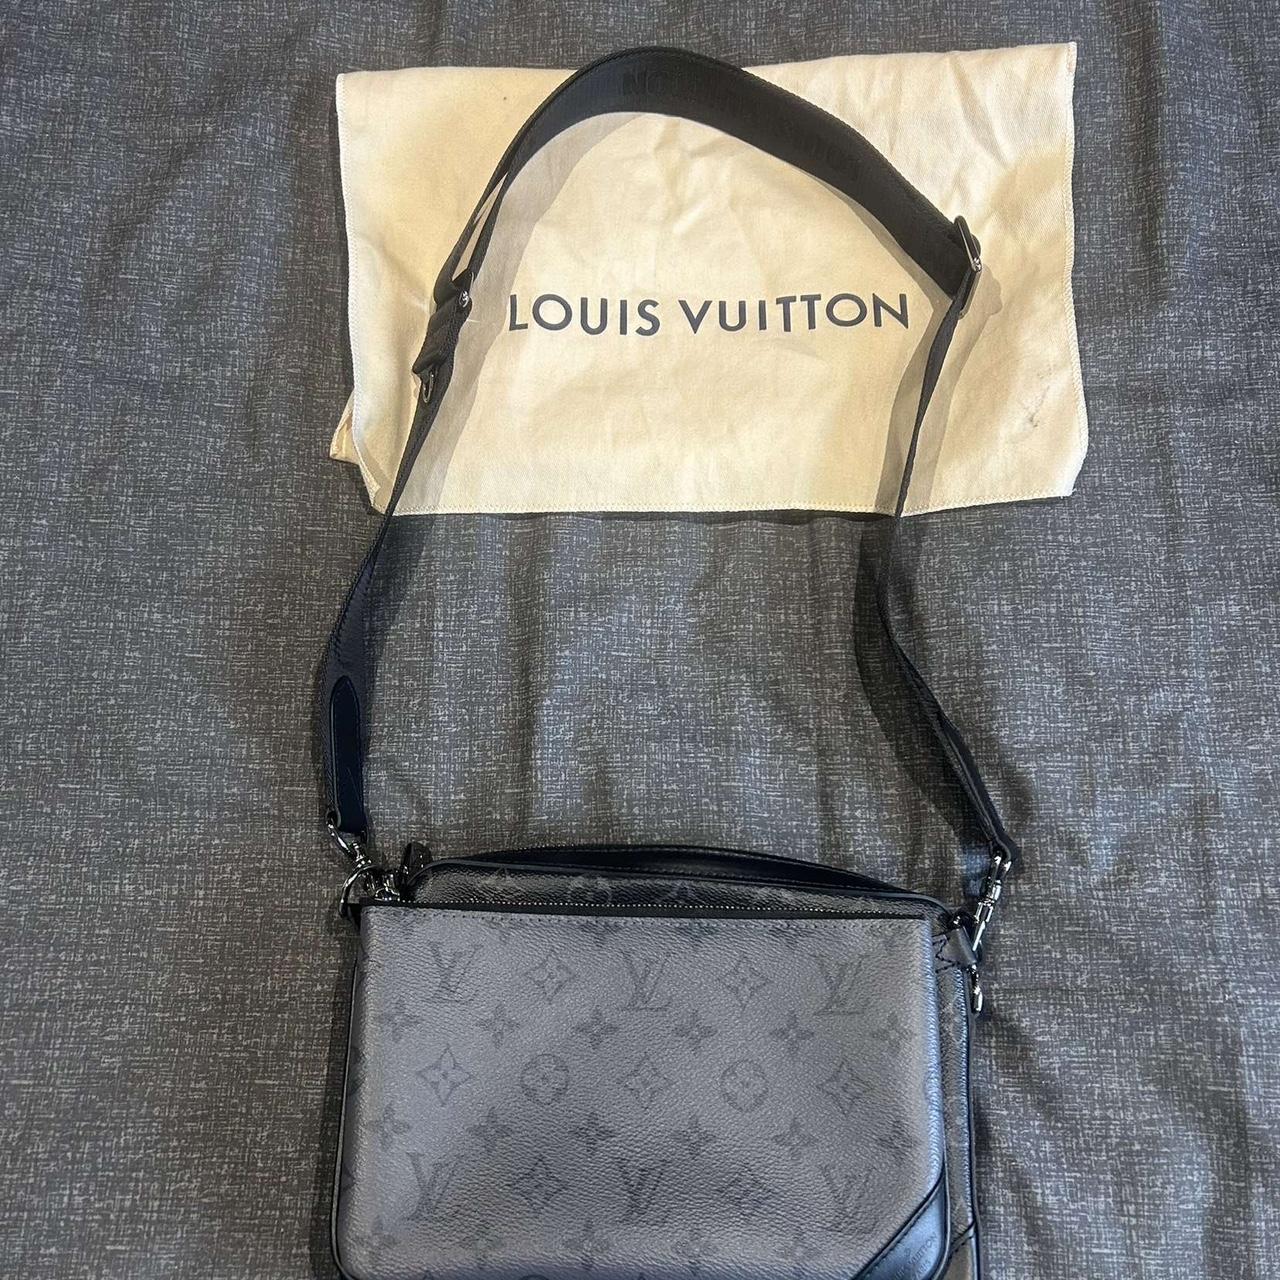 Louis Vuitton messenger bag, 9/10 condition, only... - Depop